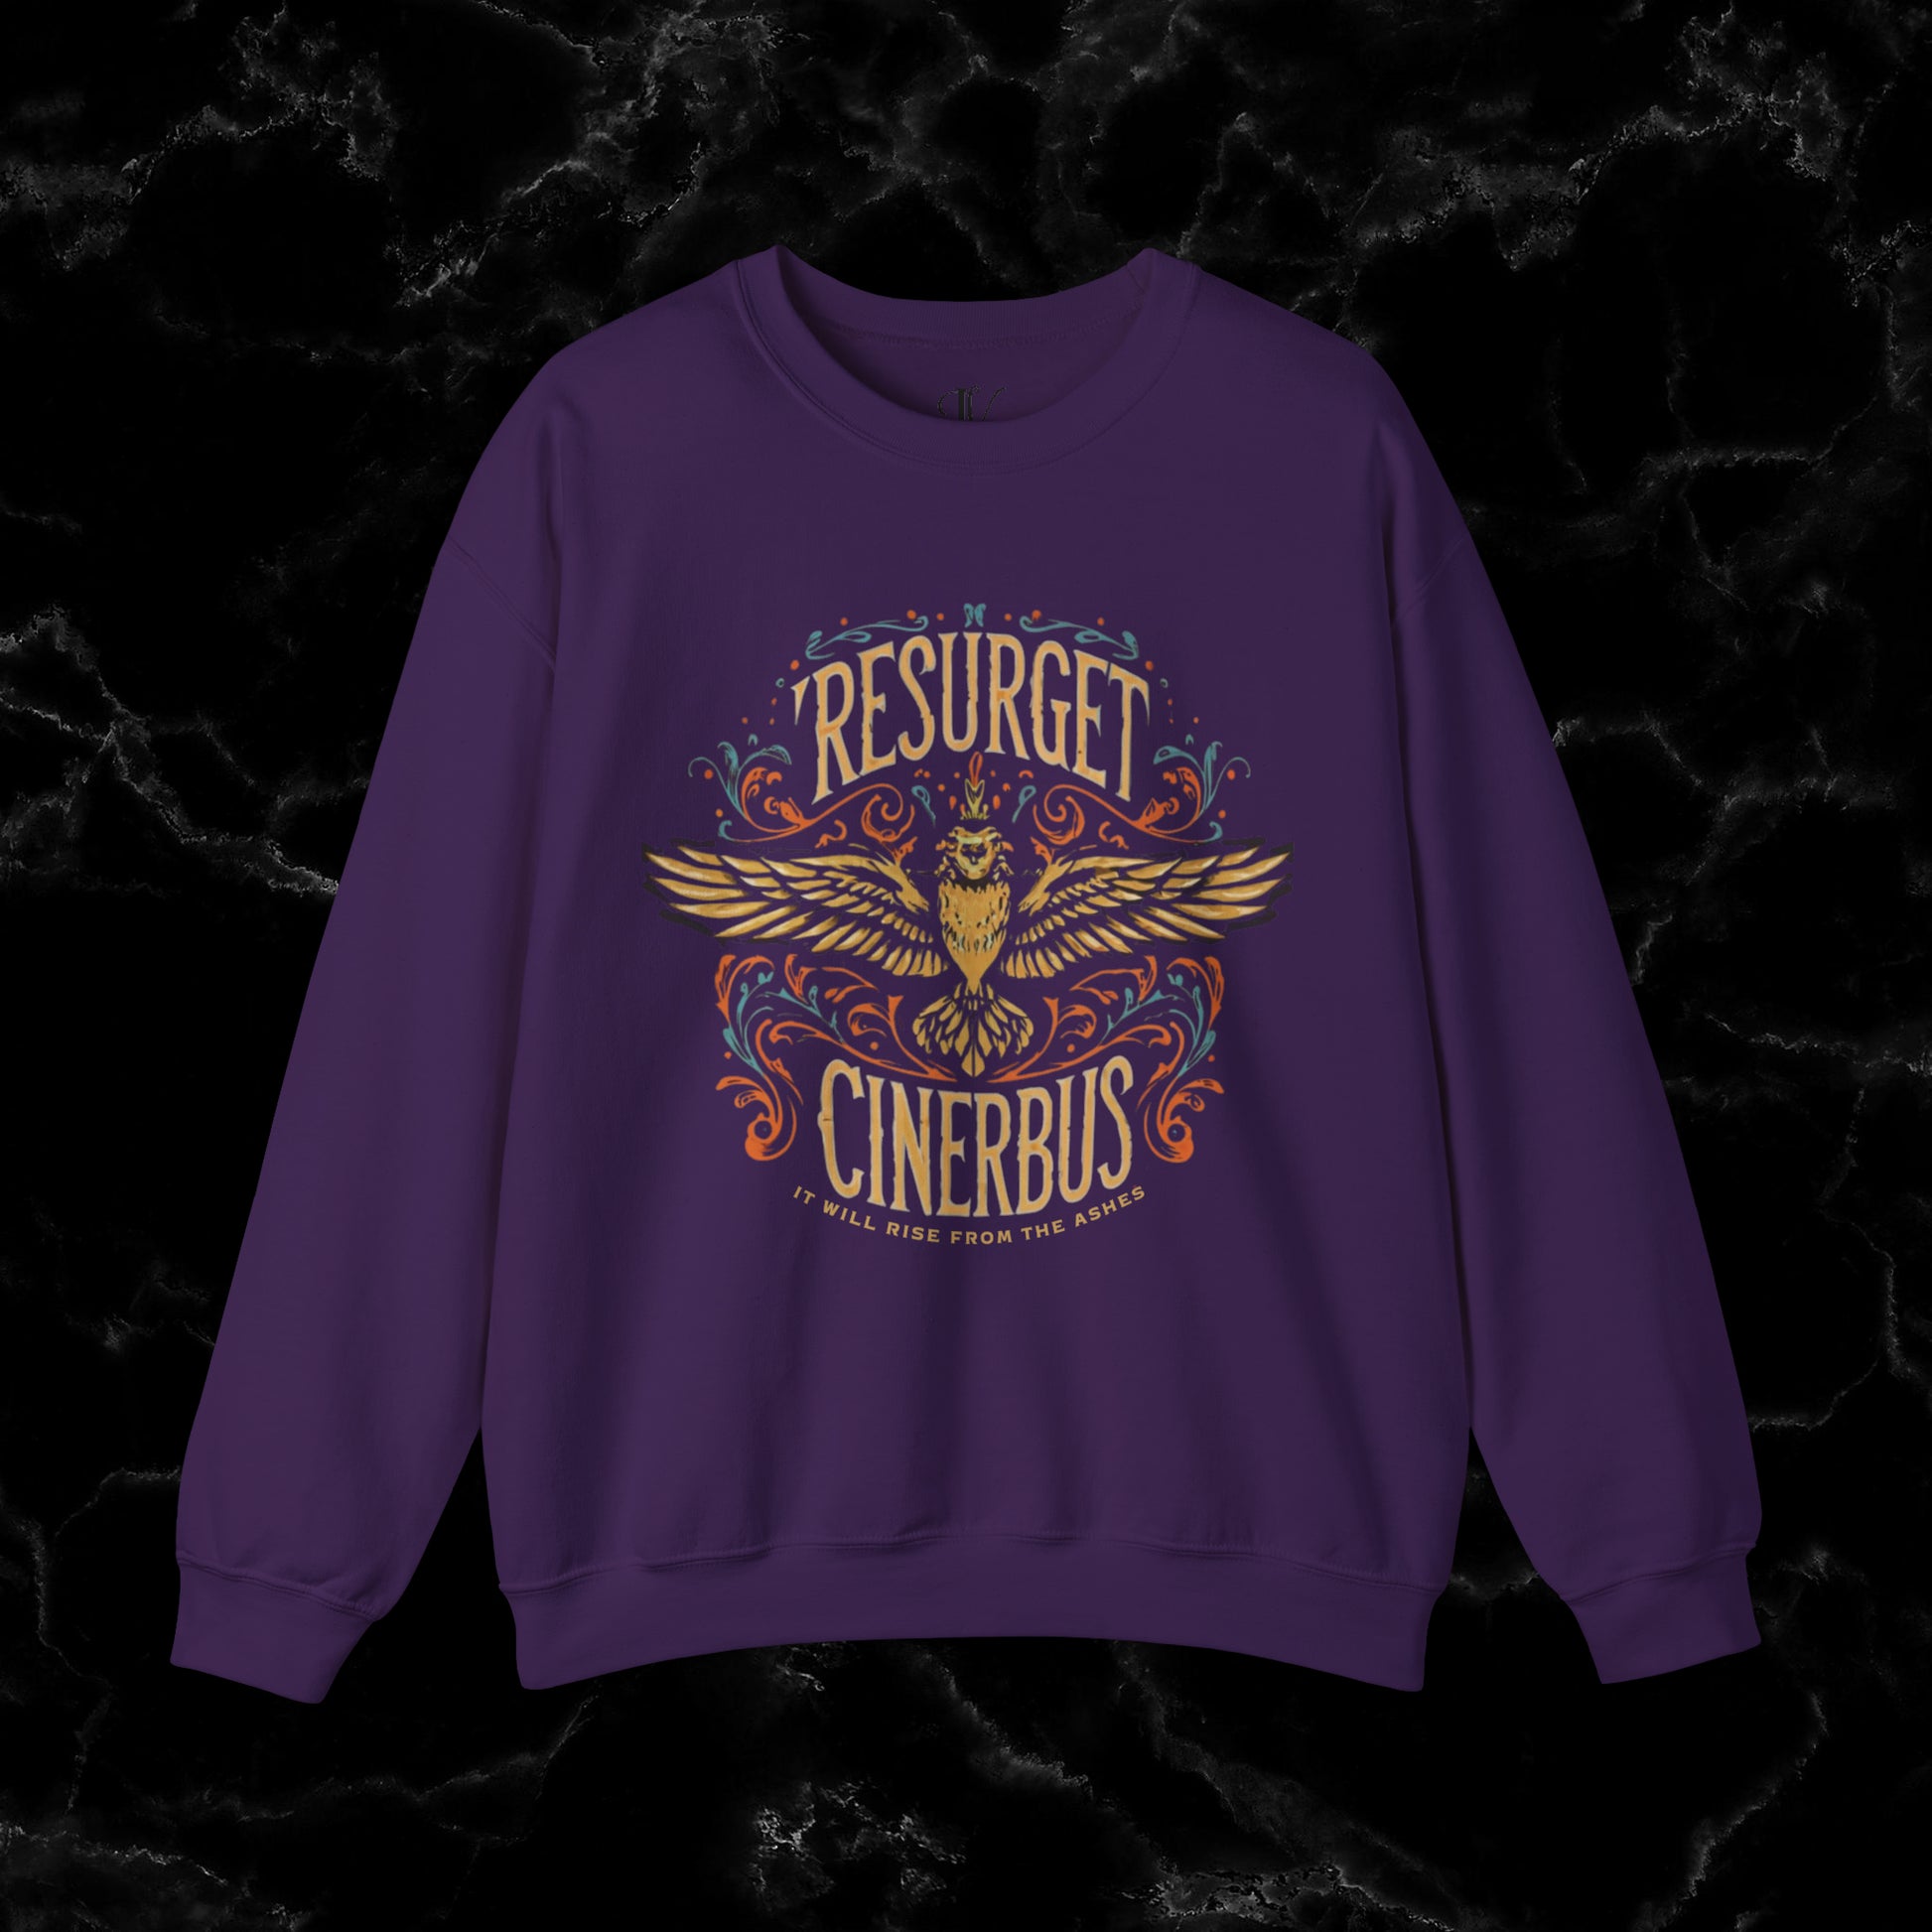 Resurget Cineribus Unisex Crewneck Sweatshirt - Latin Inspirational Gifts for Sports Football Fans Sweatshirt S Purple 